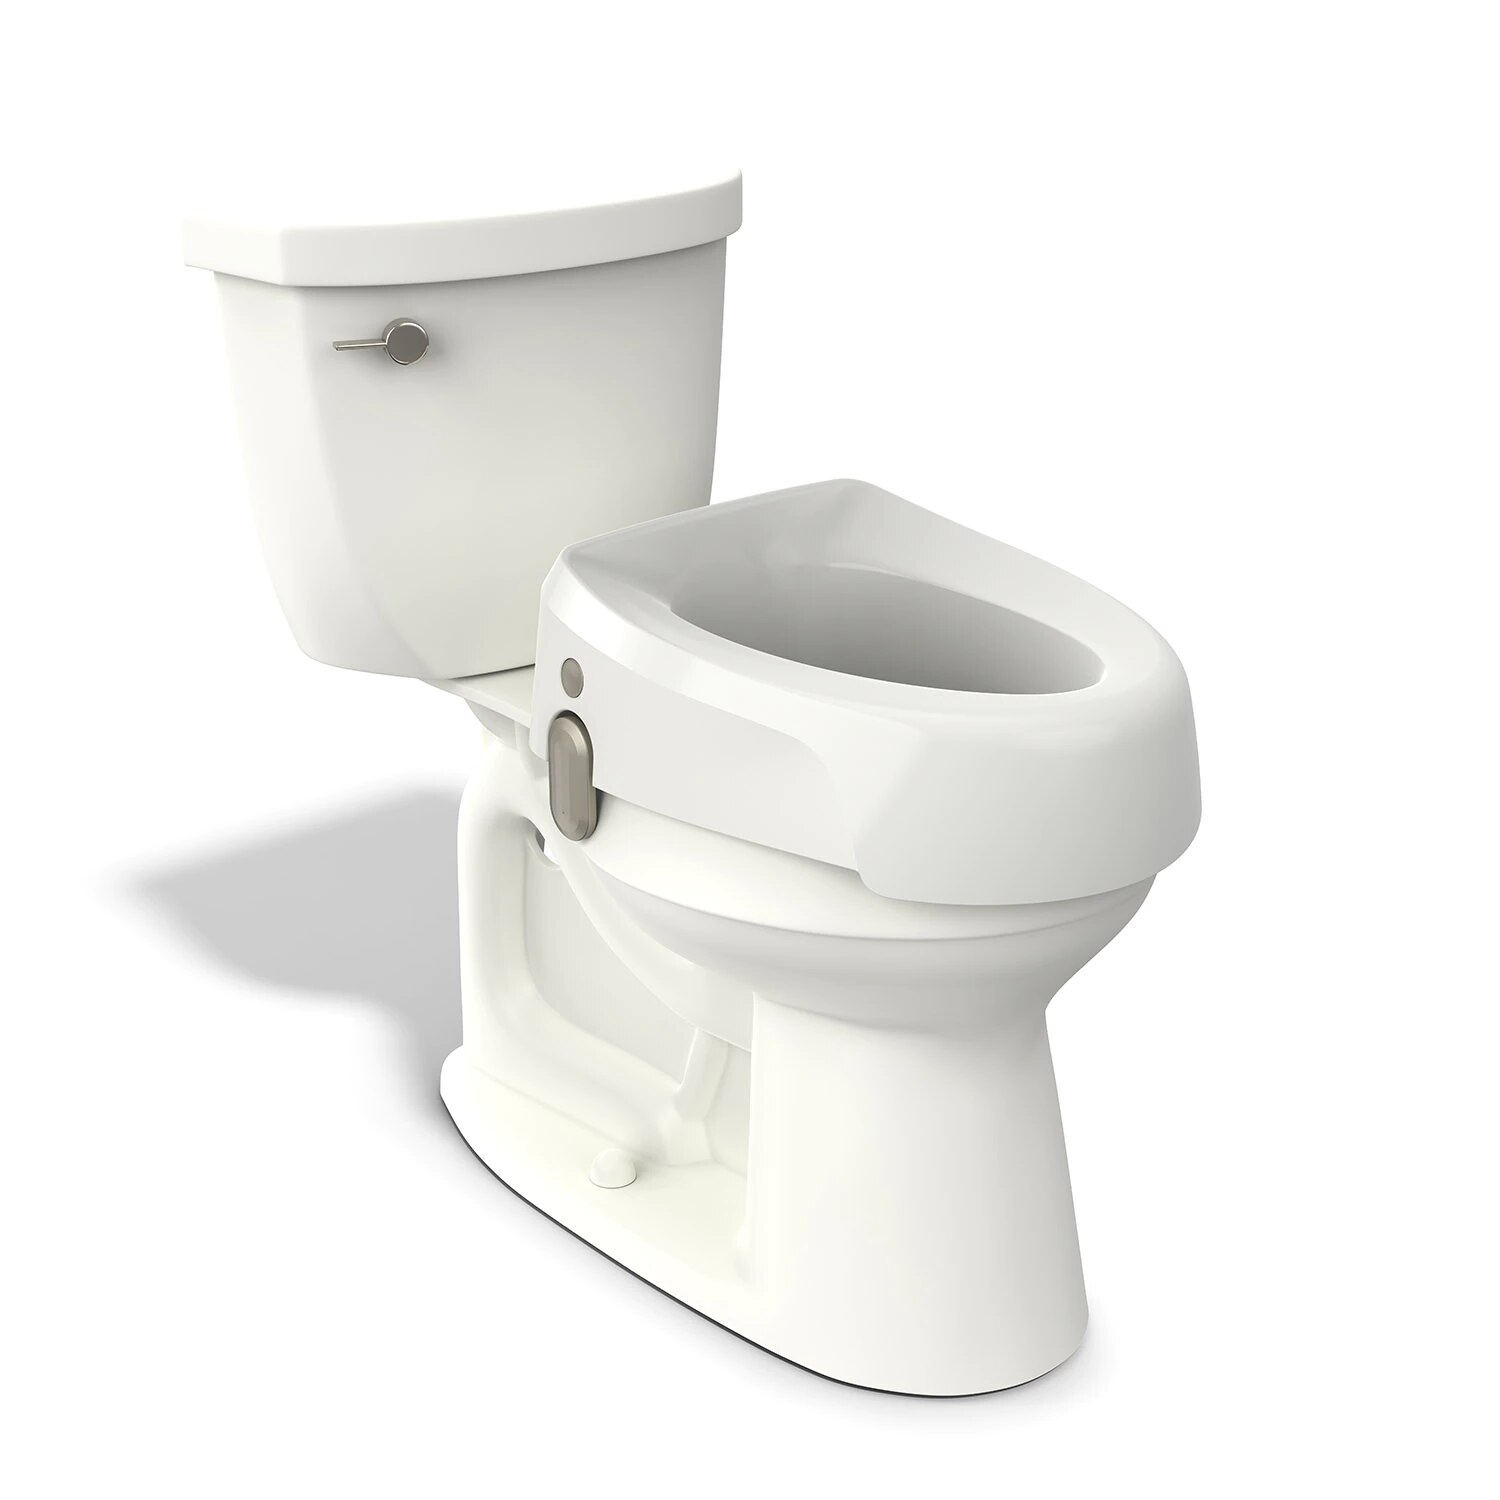 CVS Health By Michael Graves Design Health Raised Toilet Seat By Michael Graves Design